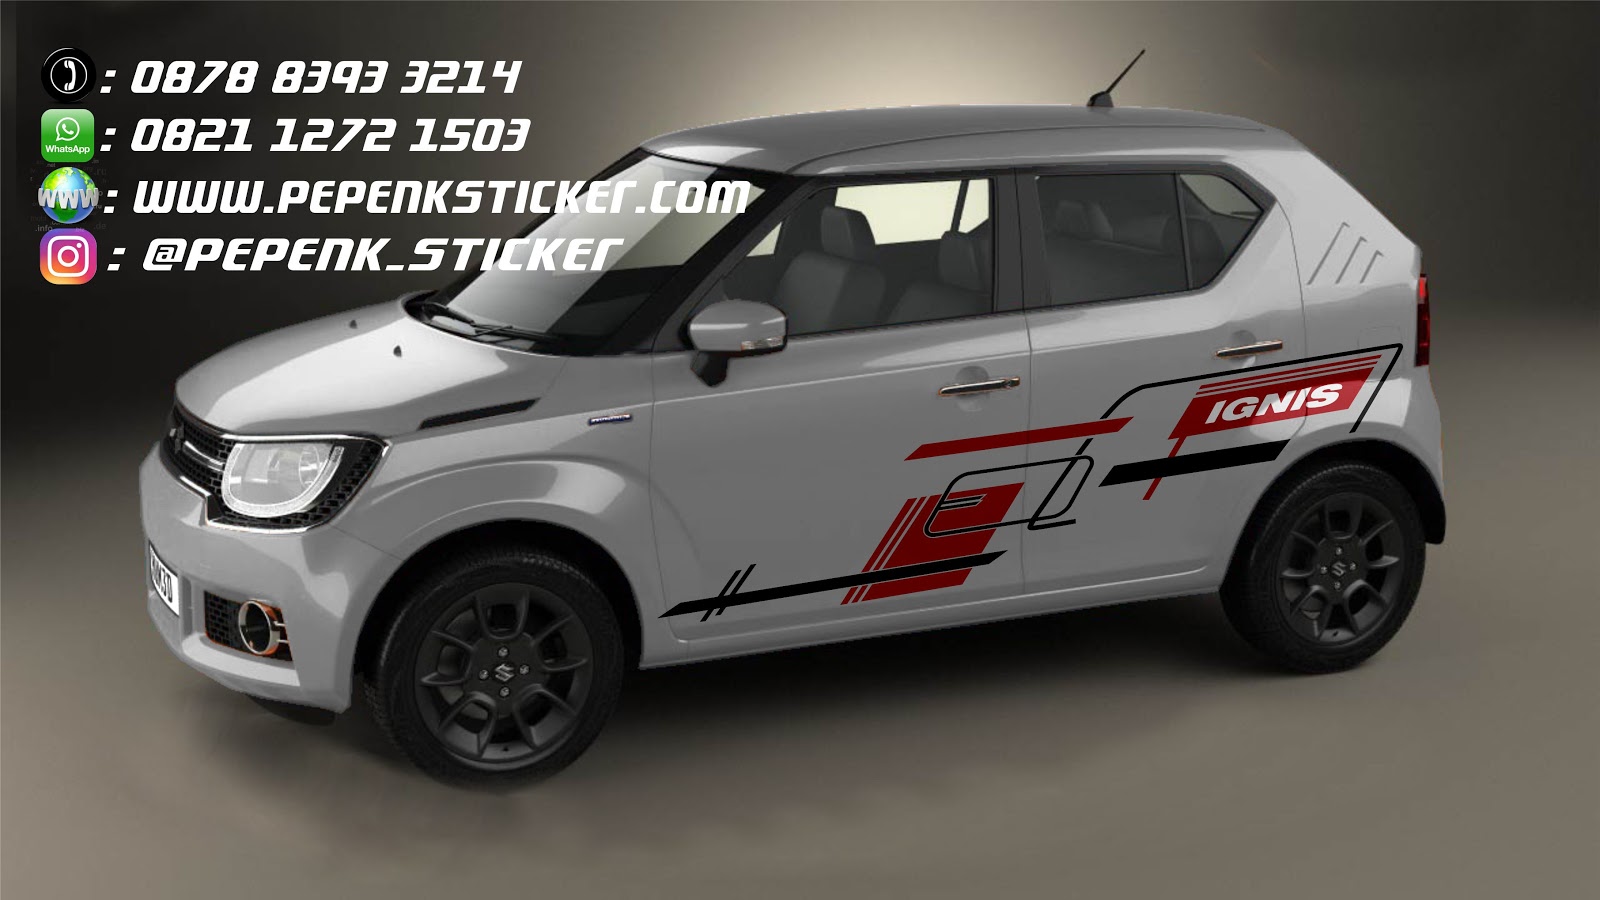 44 Modifikasi Stiker  Mobil  Suzuki Apv Terbaru Stamodifikasi